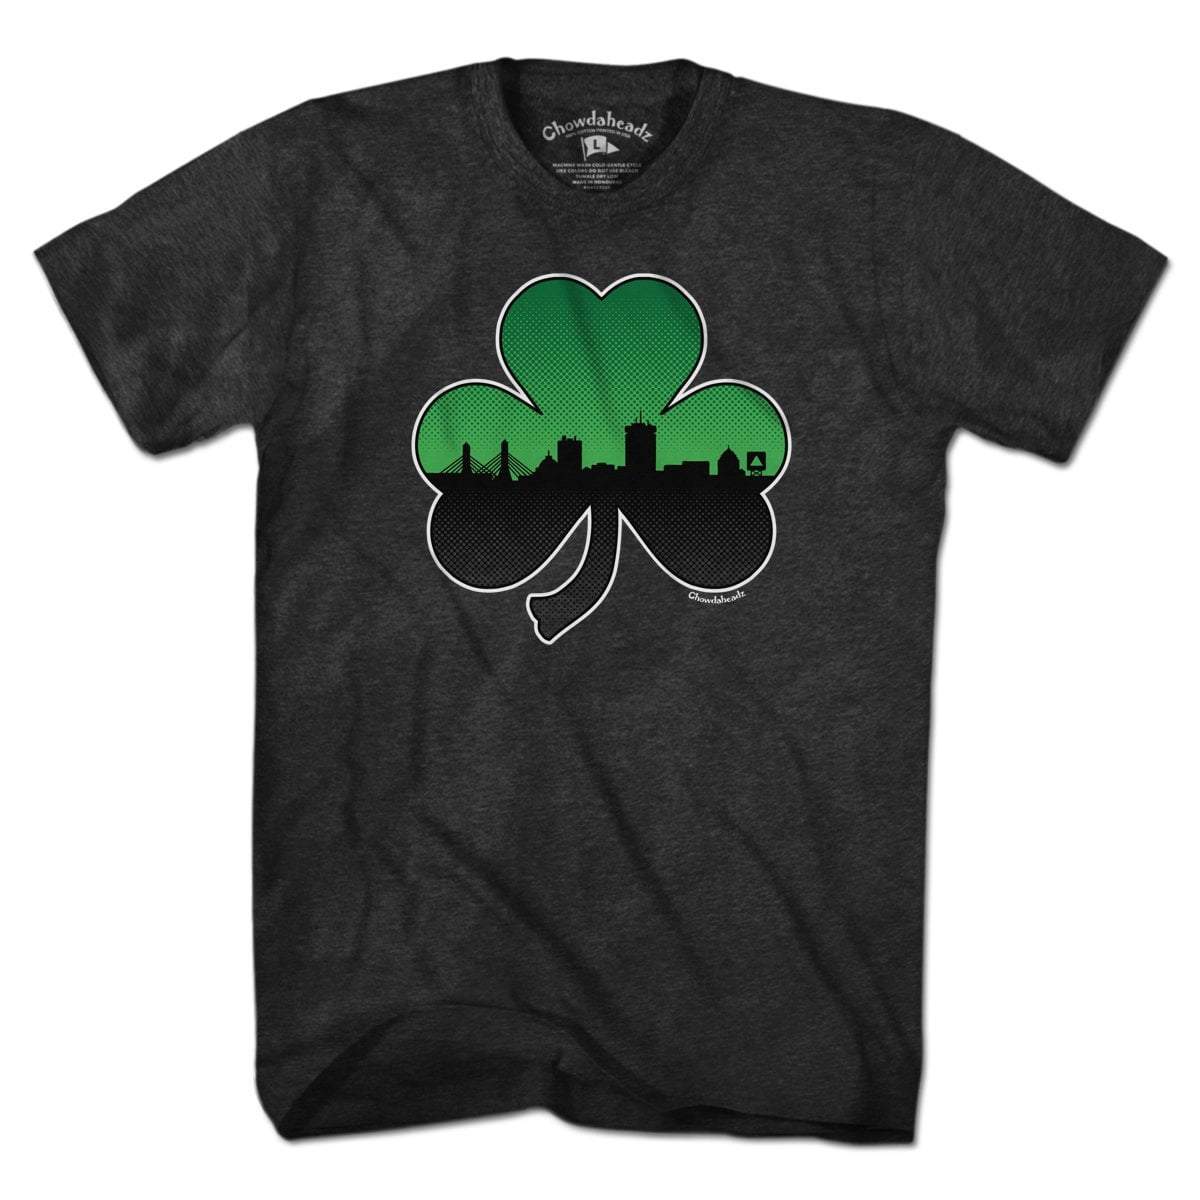 Boston Shamrock Skyline T-Shirt - Chowdaheadz